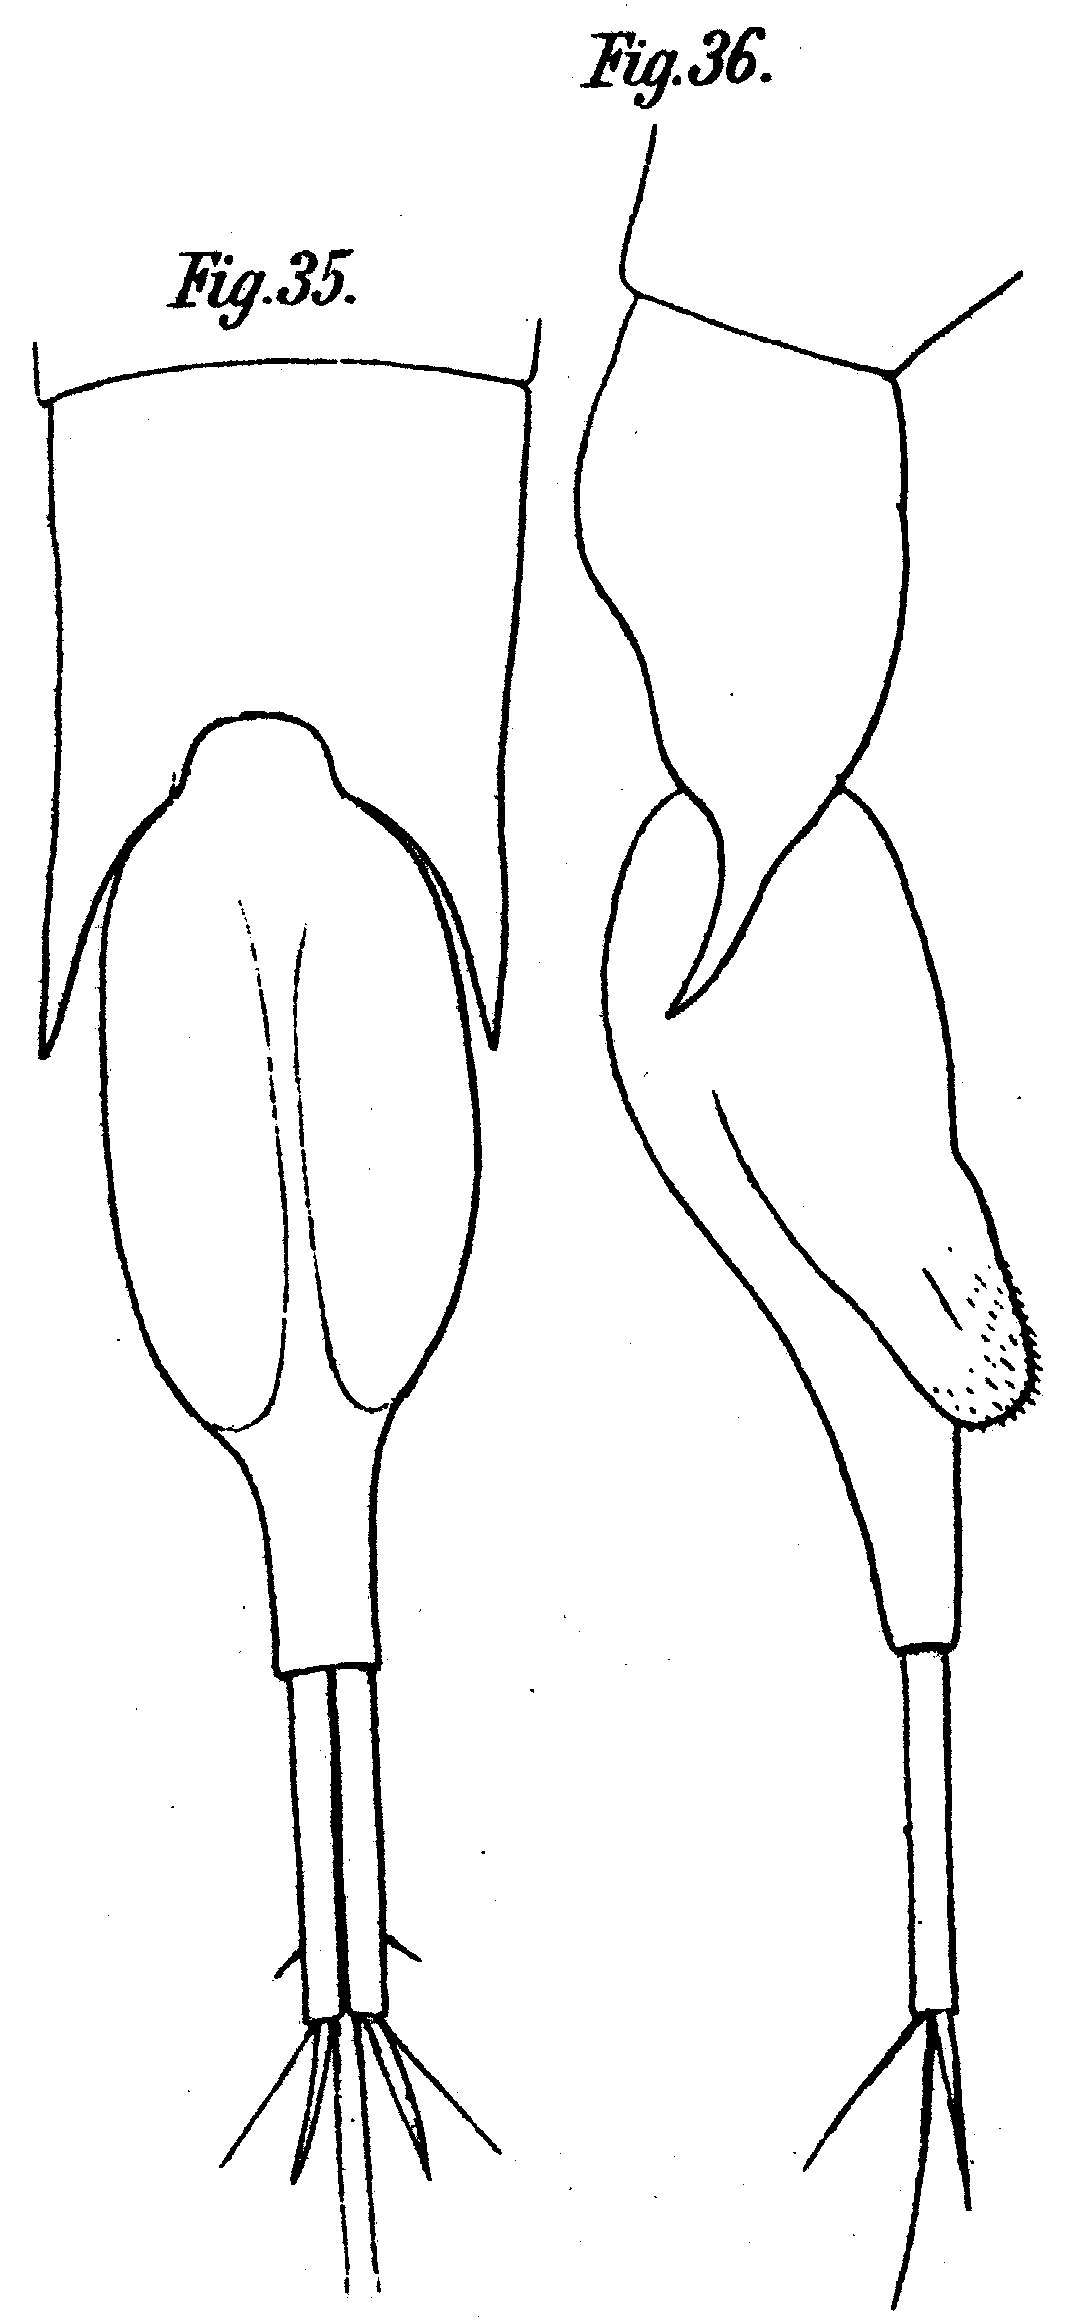 Espce Farranula gibbula - Planche 7 de figures morphologiques